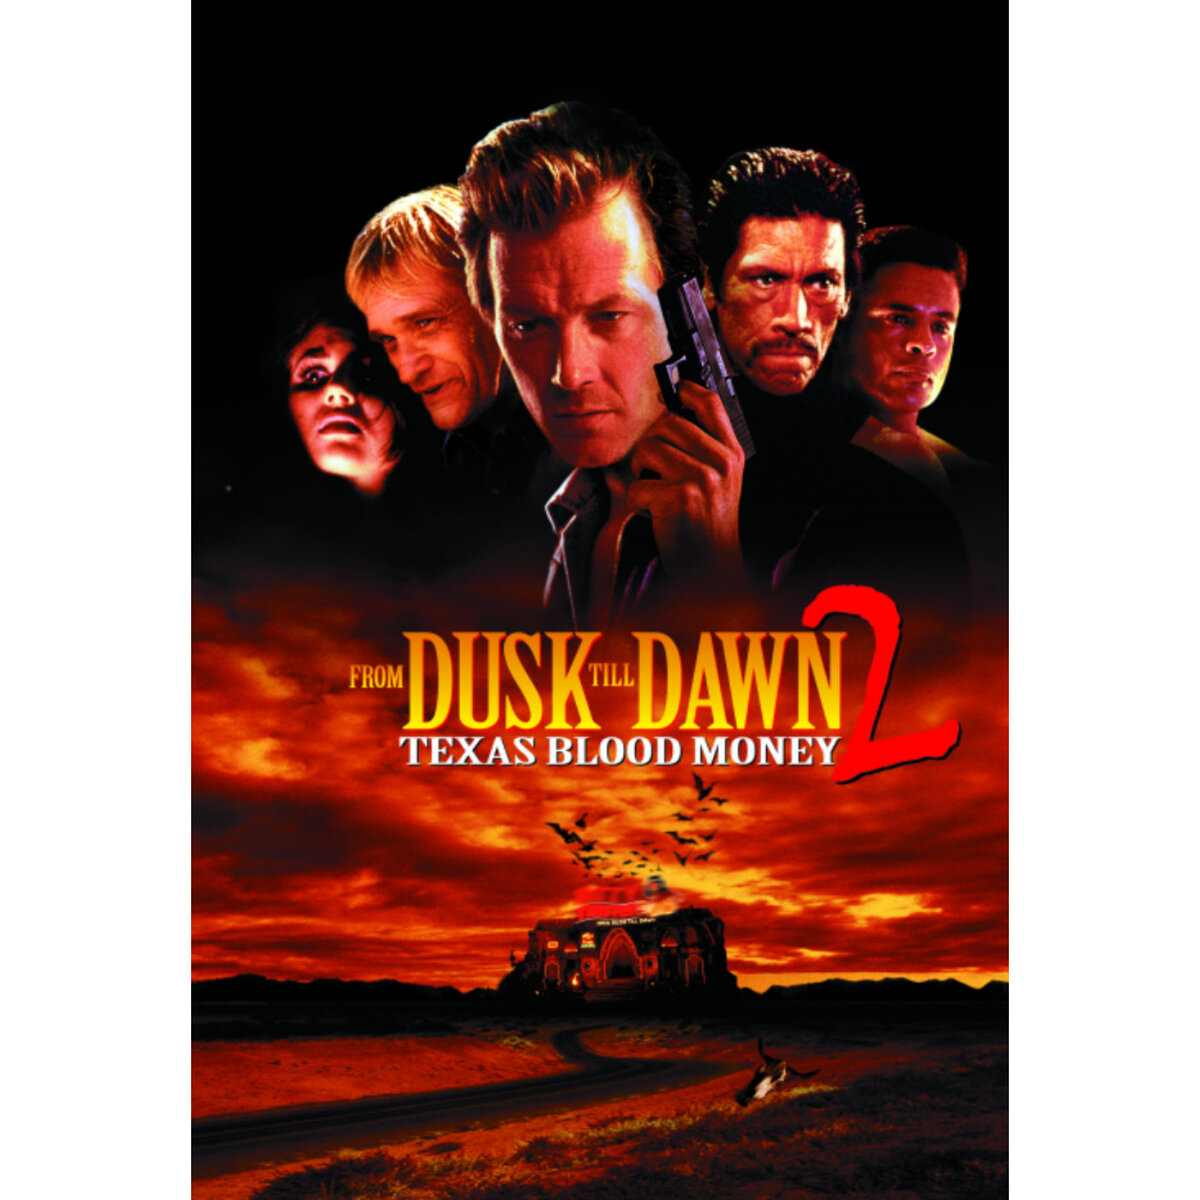 From Dusk Till Dawn 2, Texas Blood Money Movie DVD